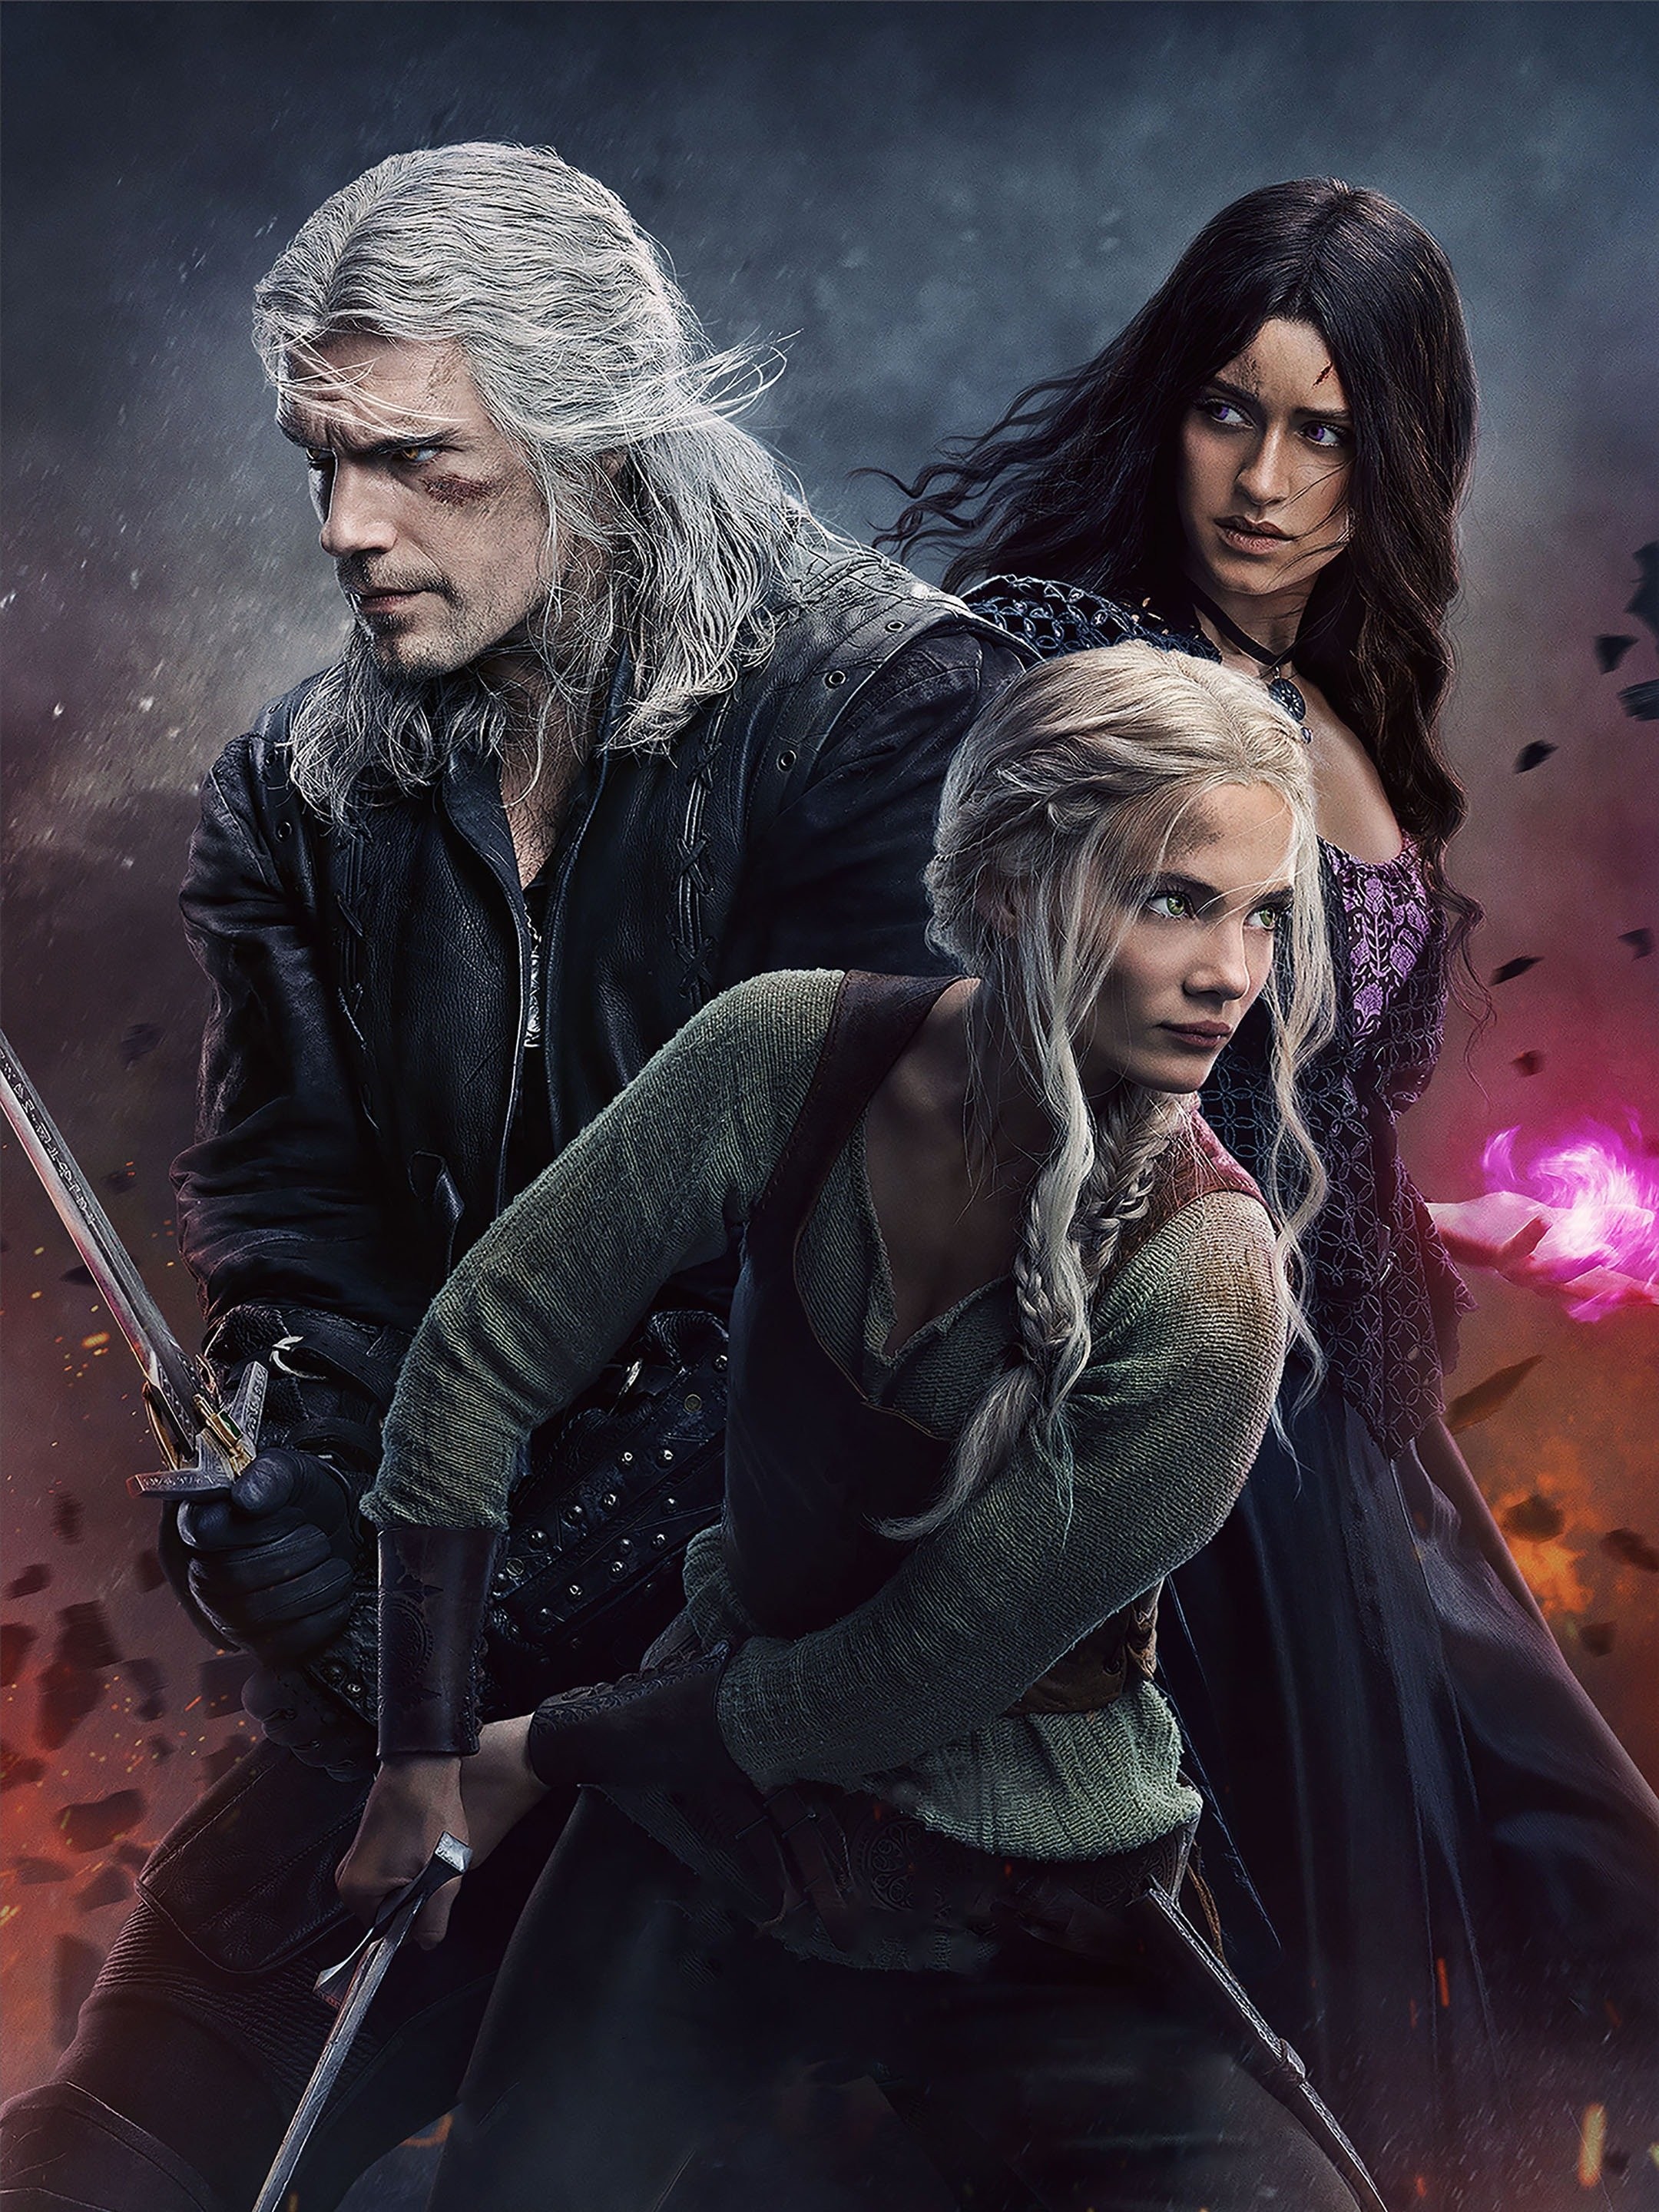 The Witcher Temporada 2 - assista todos episódios online streaming